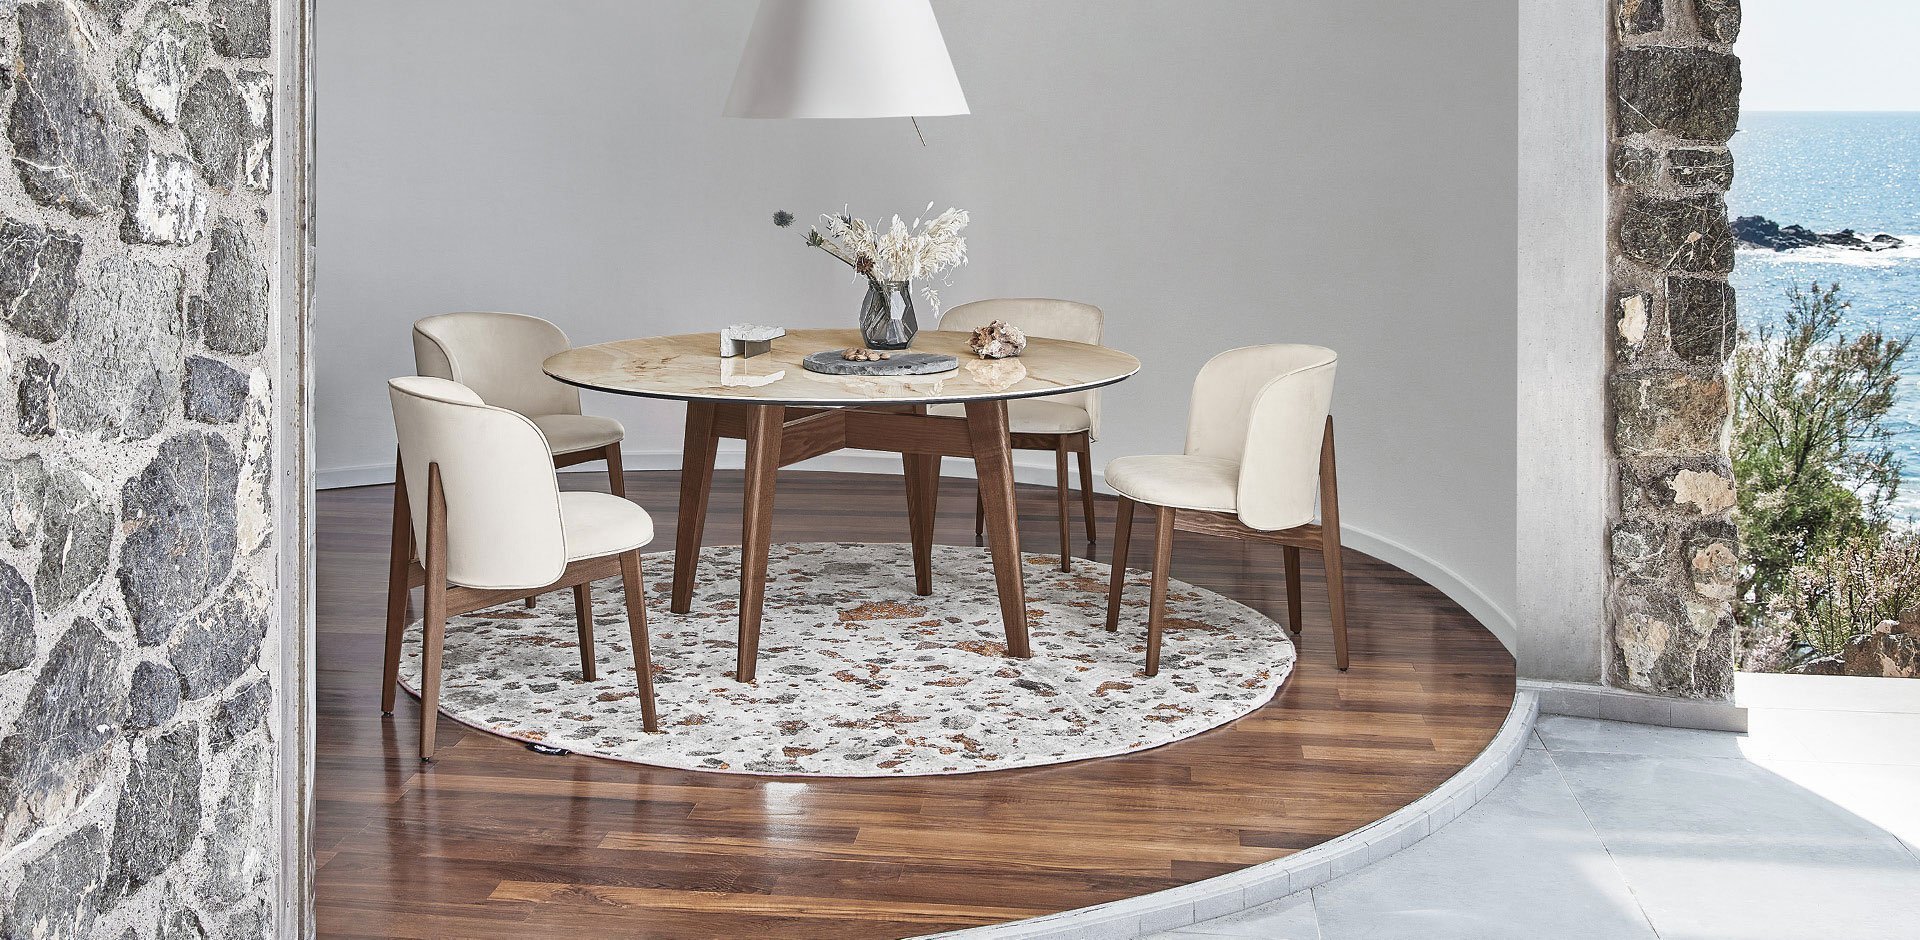 Abrey dining table Calligaris Italian furniture Cyprus Nicosia Takis Angelides Furnihome